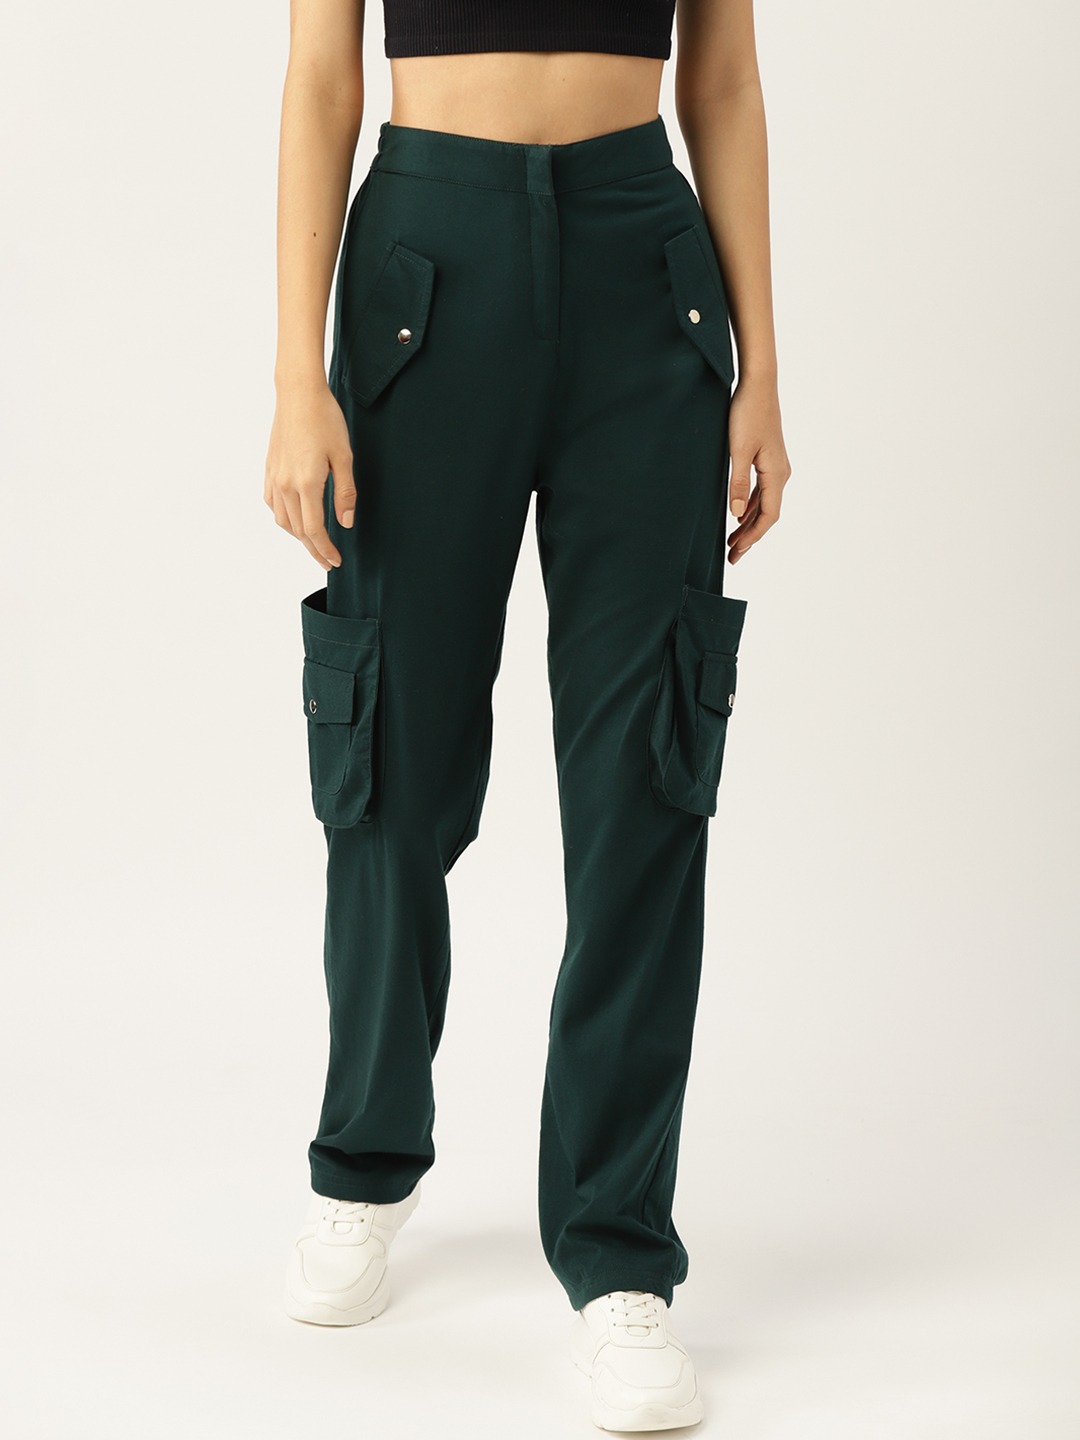 Camouflage Pants Women Dark Green Cargo| Alibaba.com